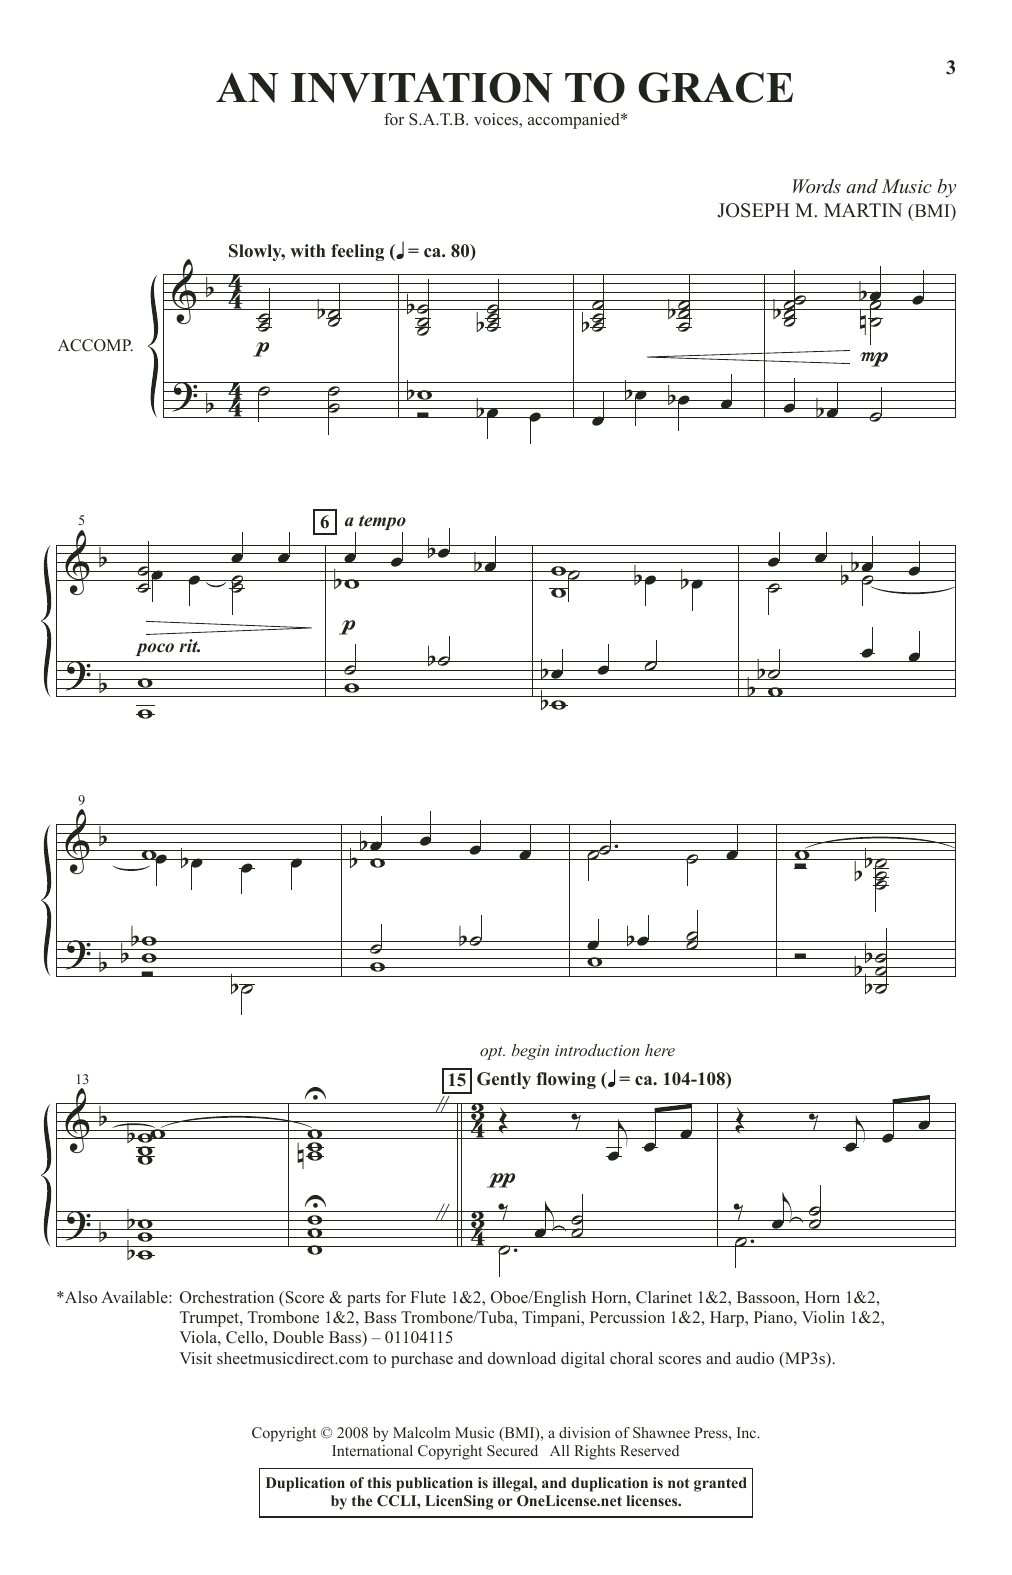 Joseph M. Martin An Invitation To Grace Sheet Music Notes & Chords for SATB Choir - Download or Print PDF